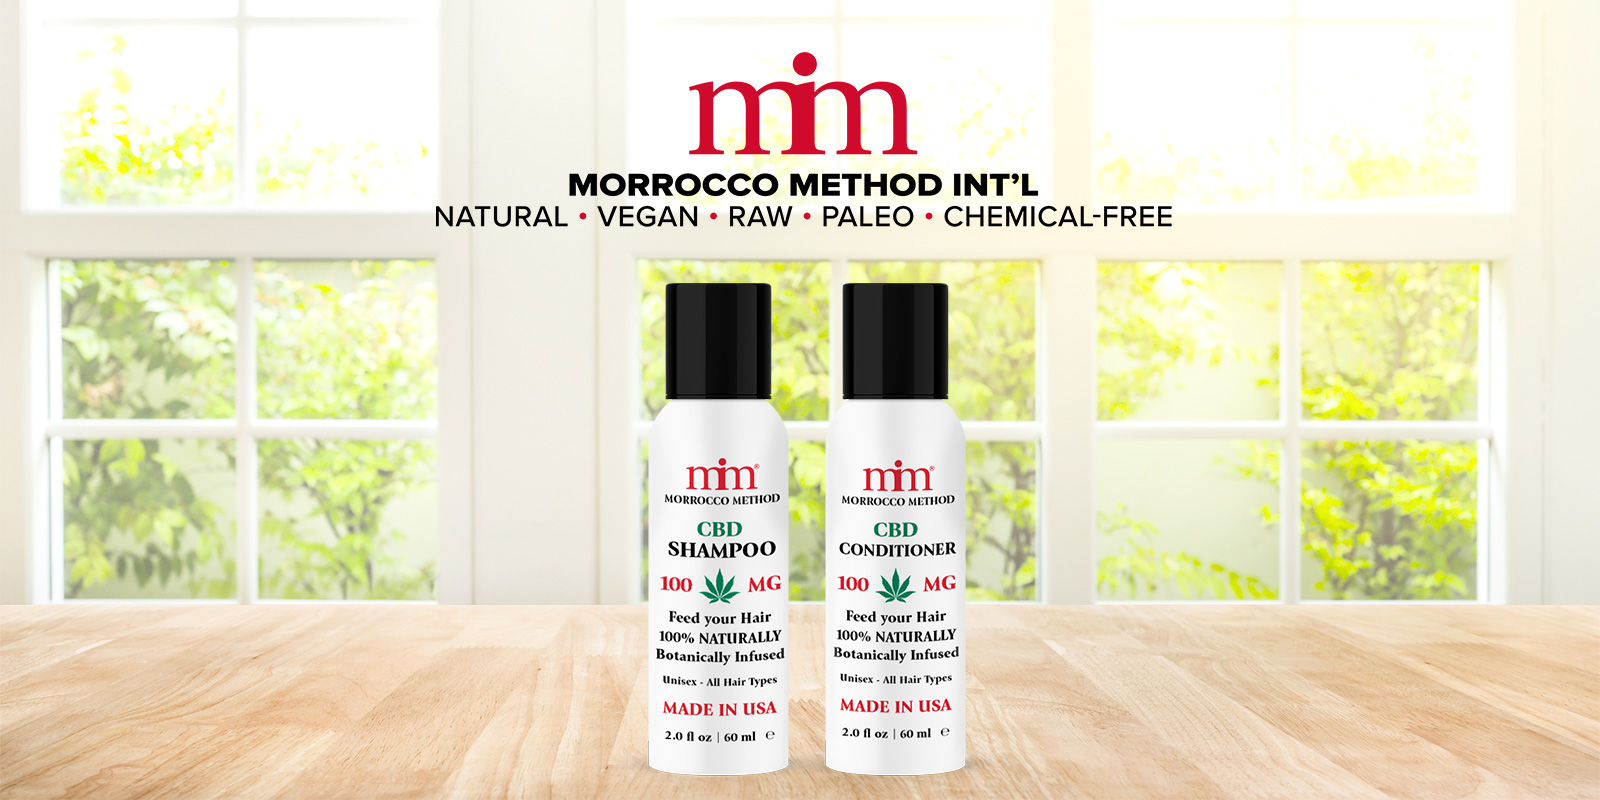 Home | Morrocco Method International CBD Shampoo & Conditioner